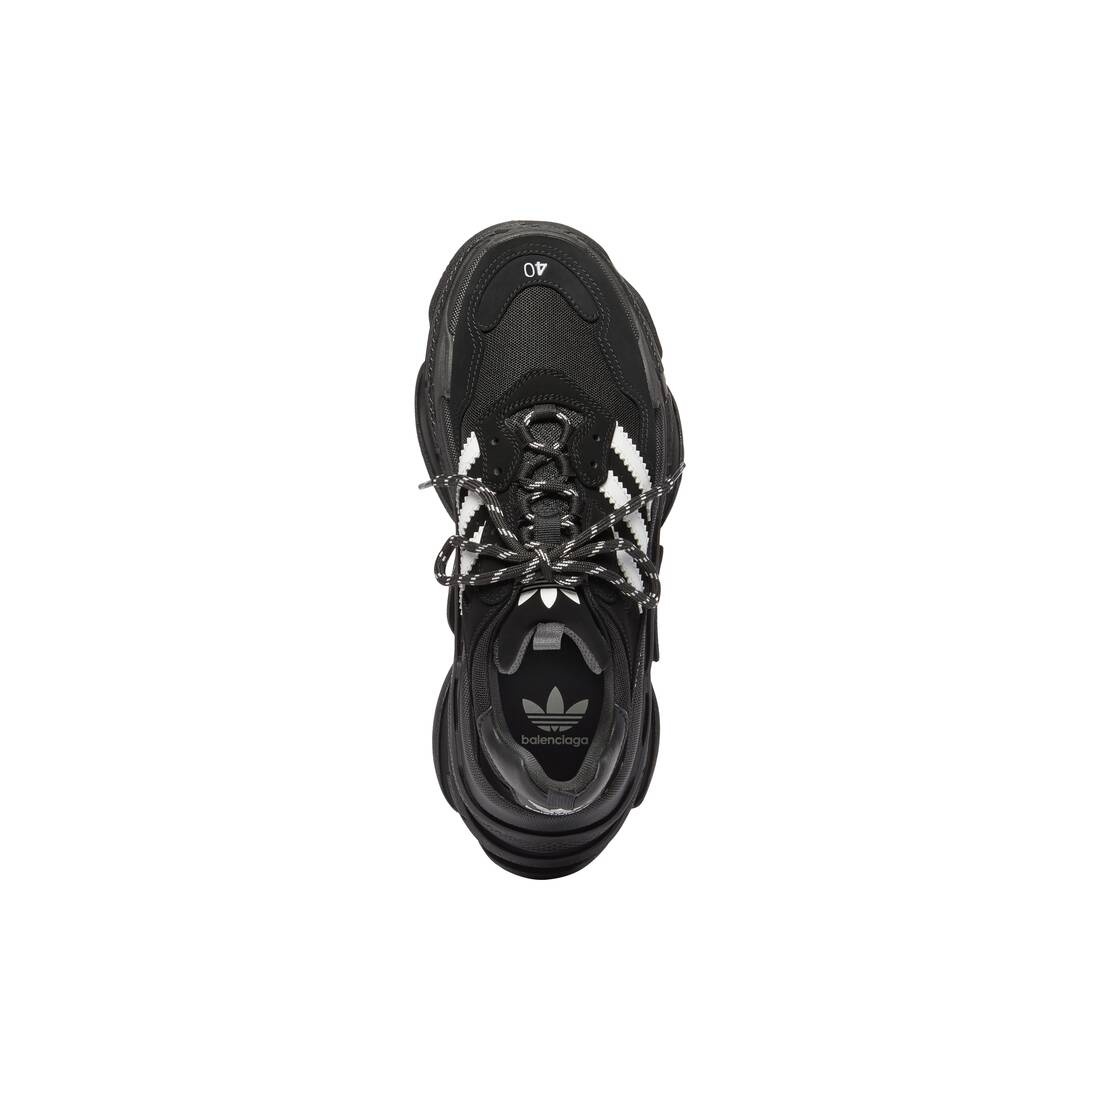 Men's Balenciaga / Adidas Triple S Sneaker in Black - 6